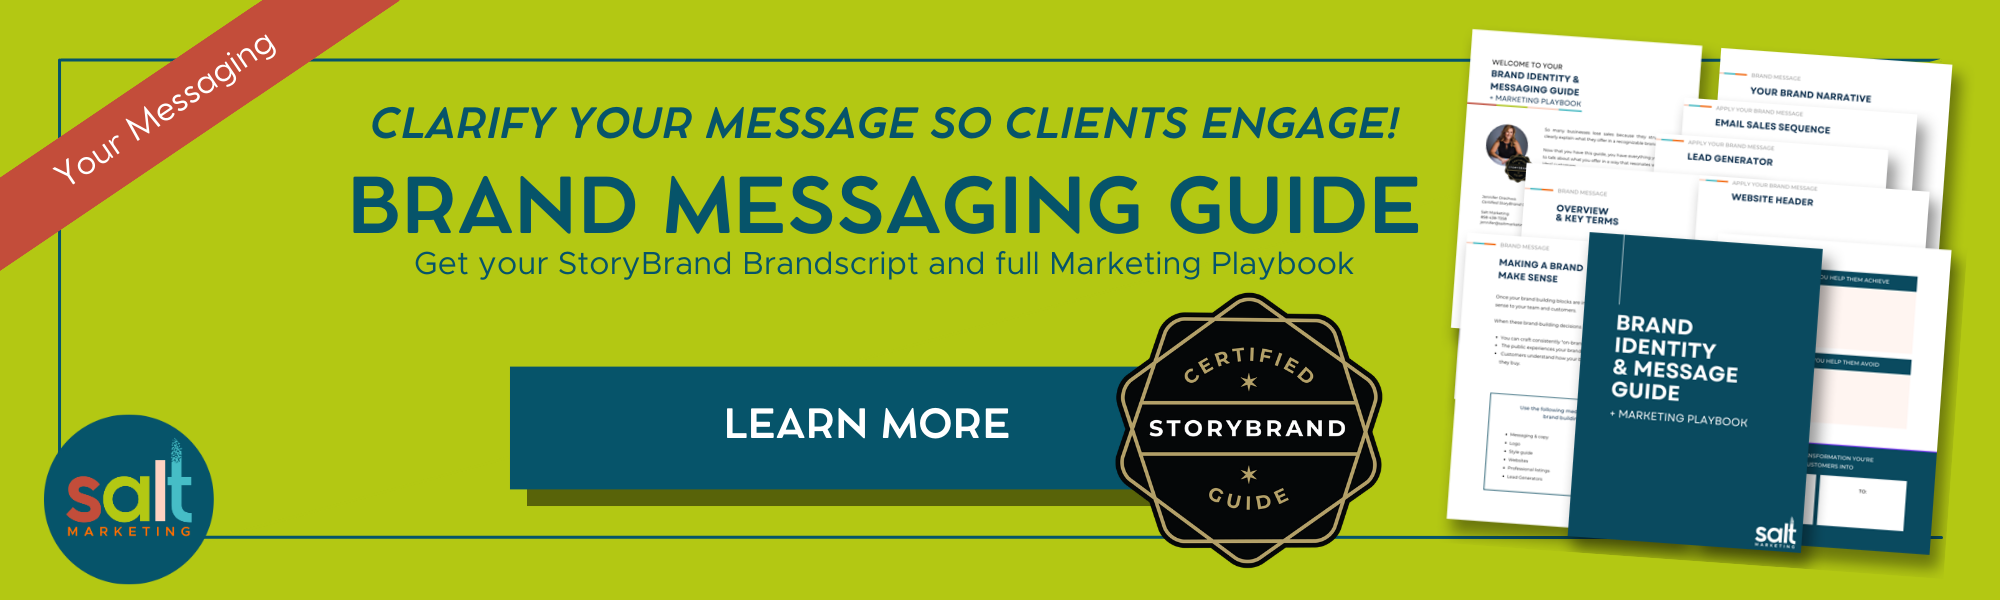 Brand Messaging Guide banner